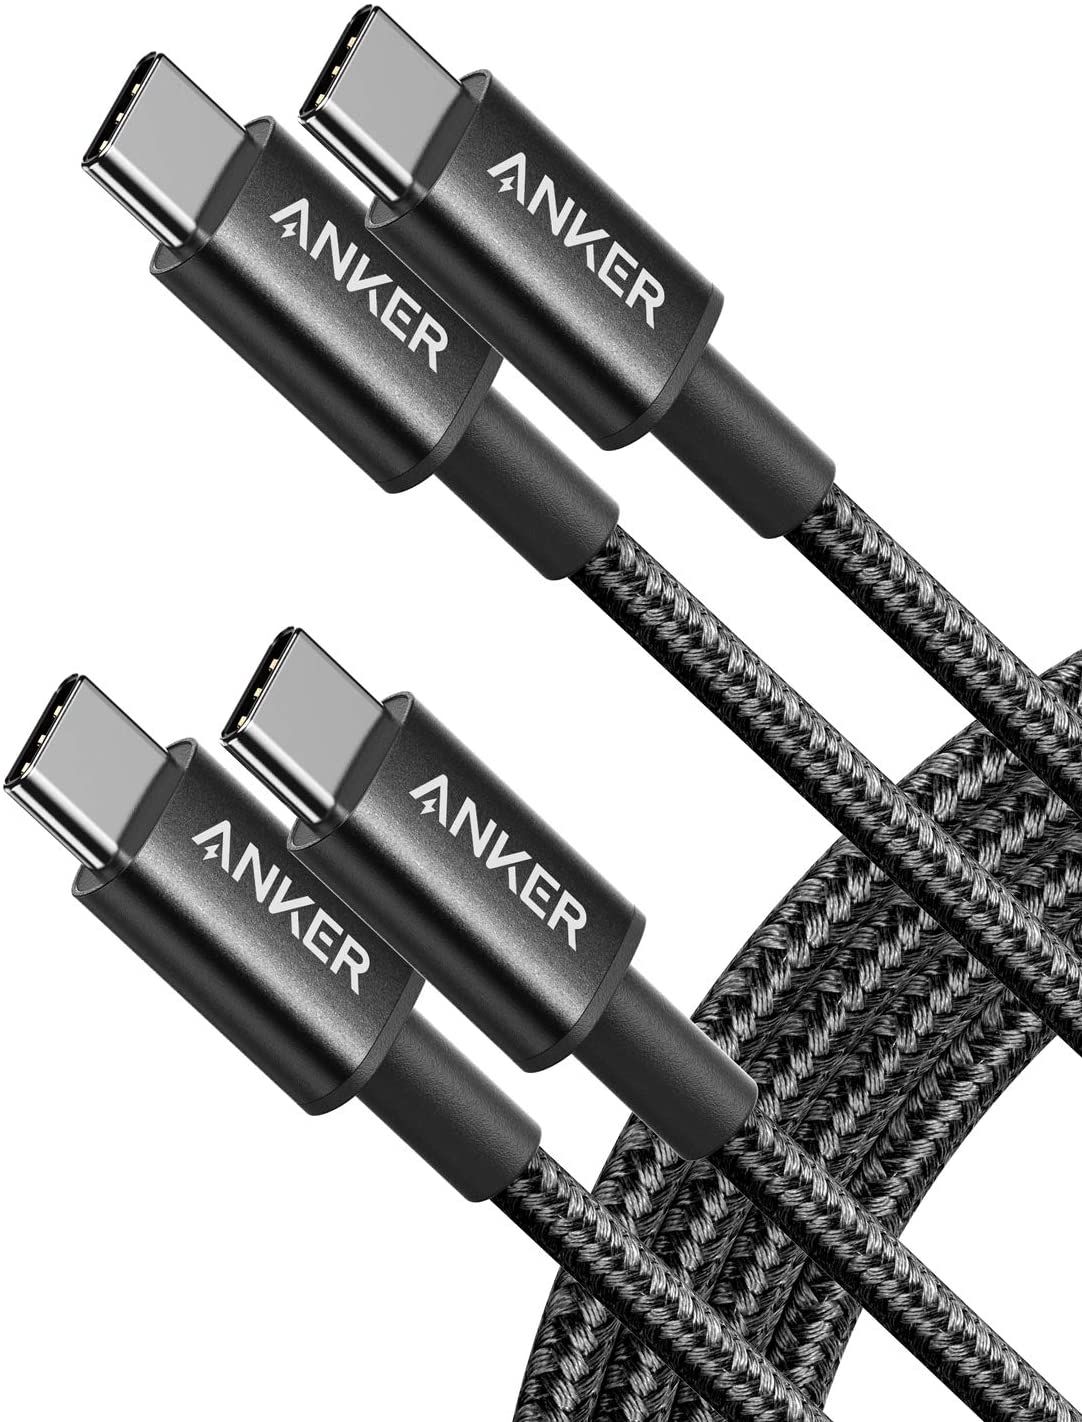 Anker New Nylon USB C to USB C Cable